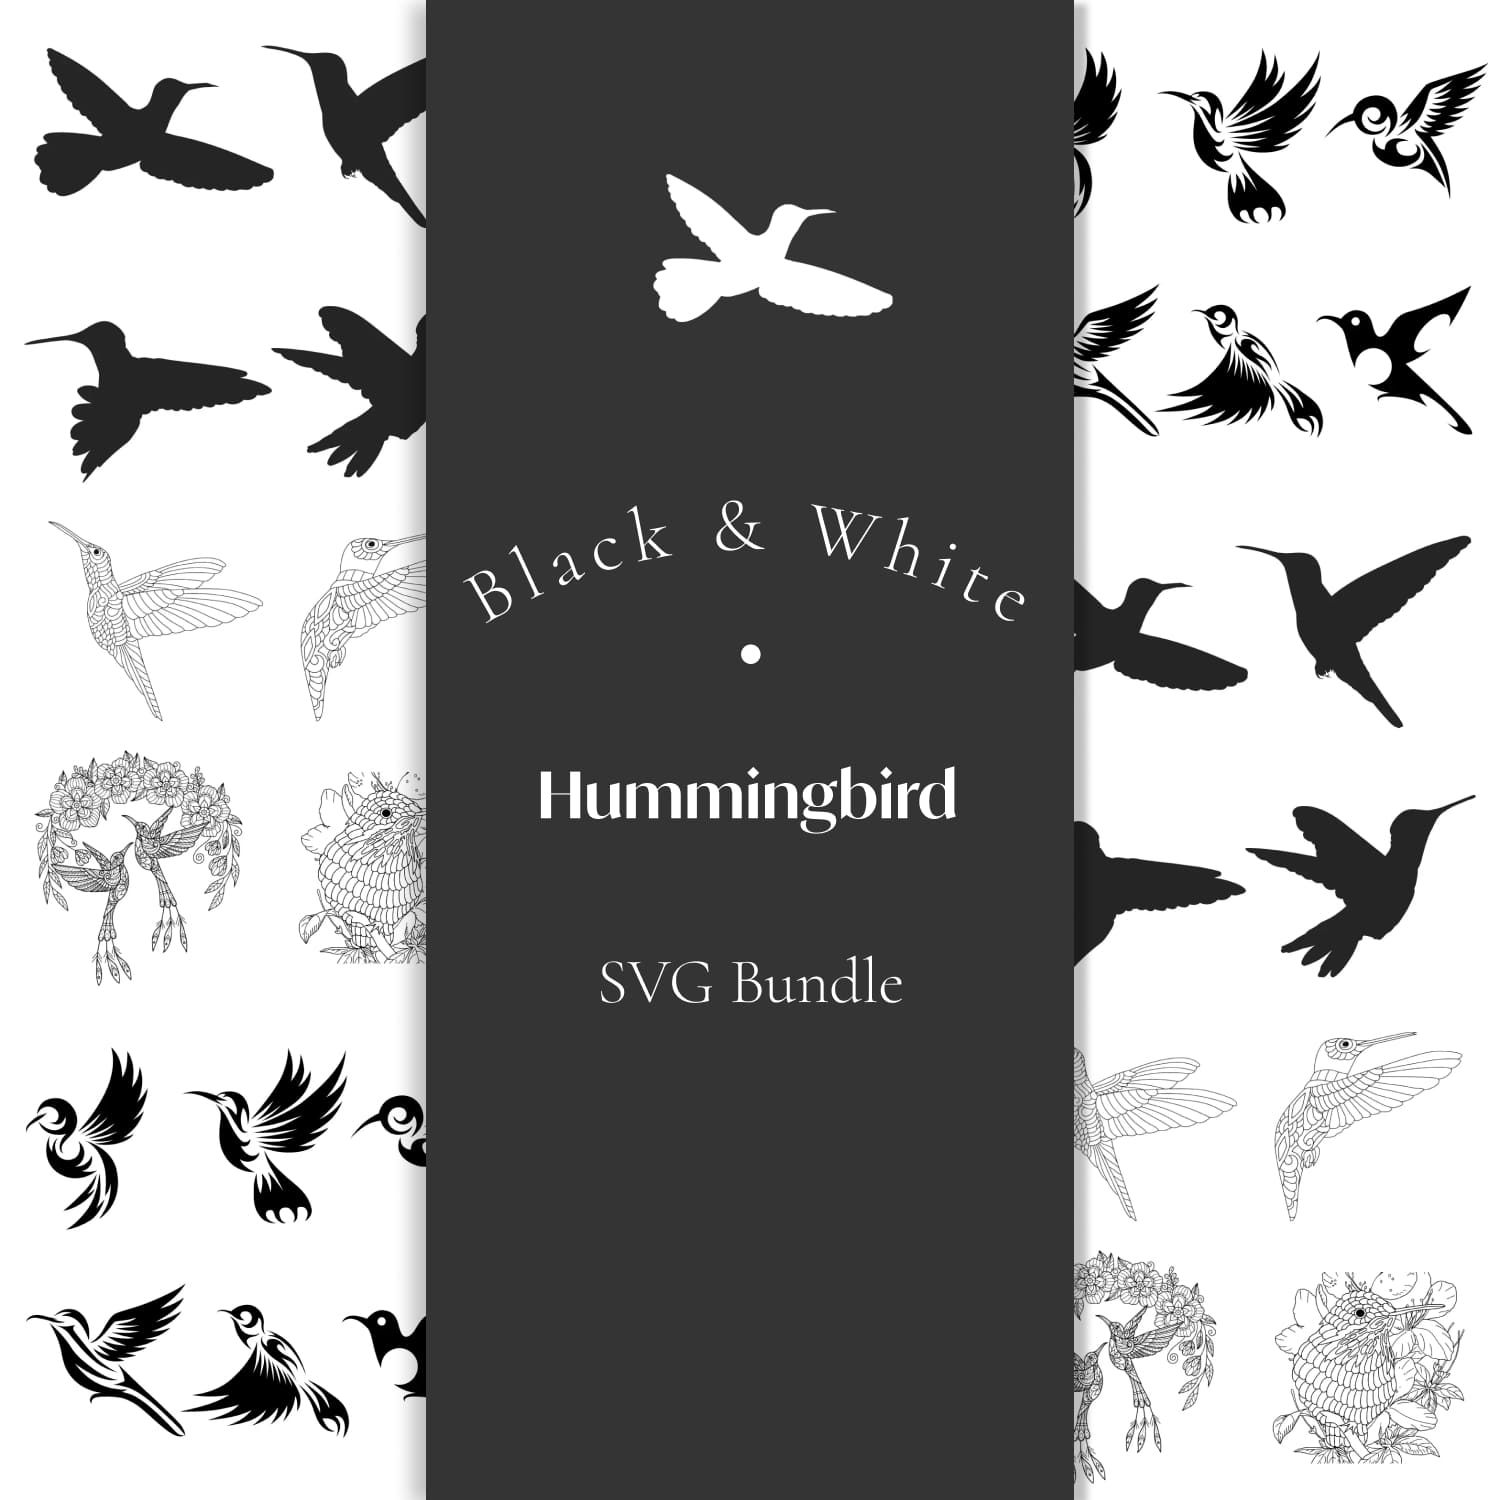 Black & White Hummingbird SVG Bundle.